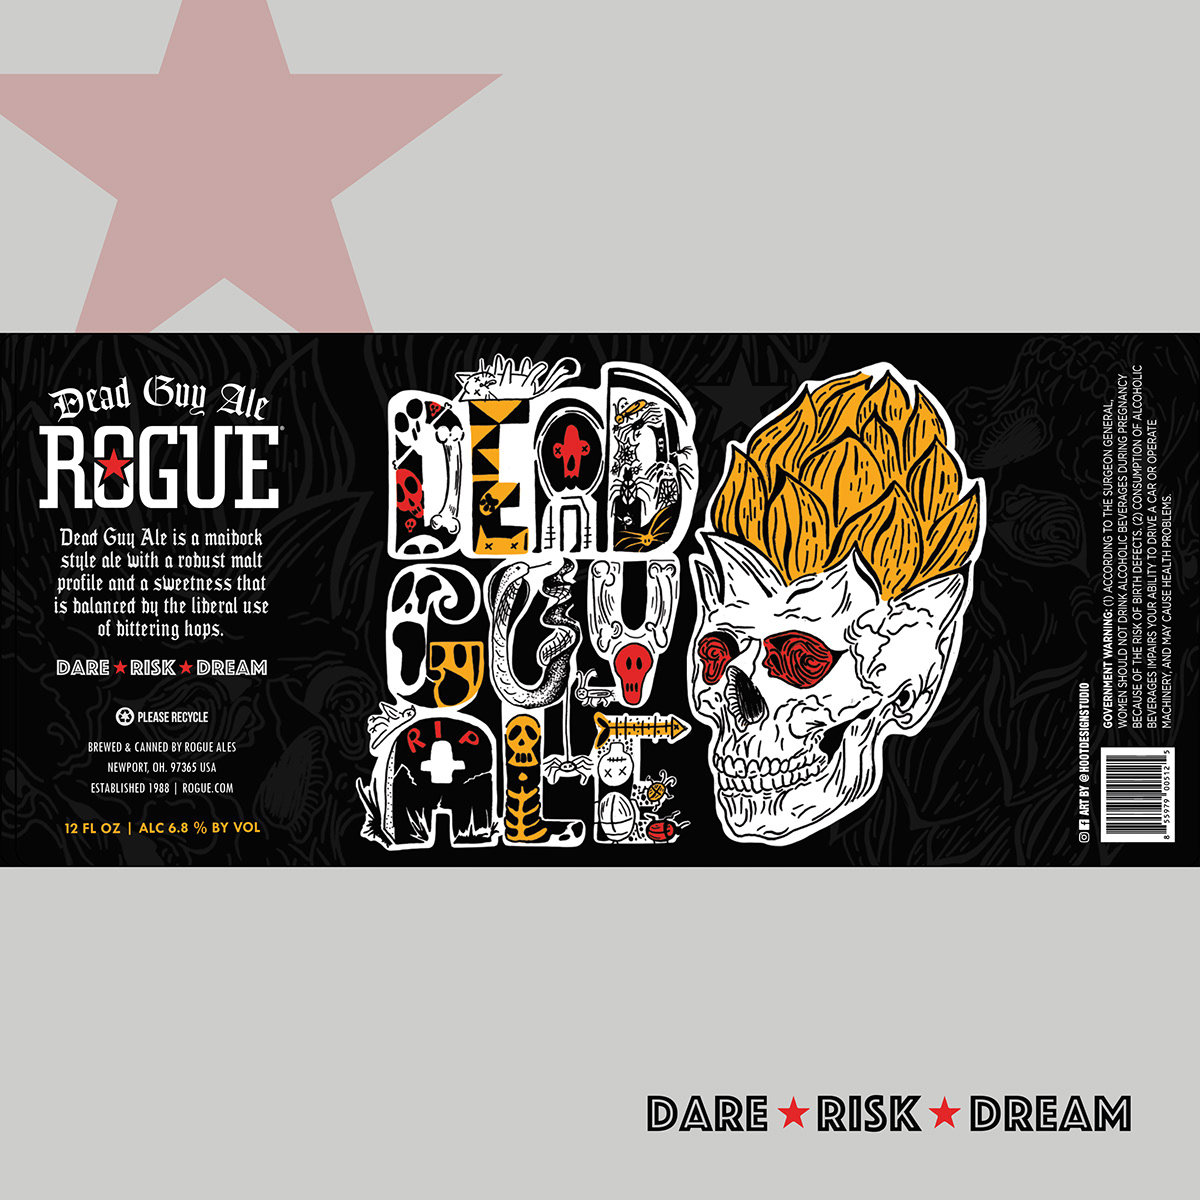 label design for craft beer can, Rogue beer dead guy can design, beer packaging
